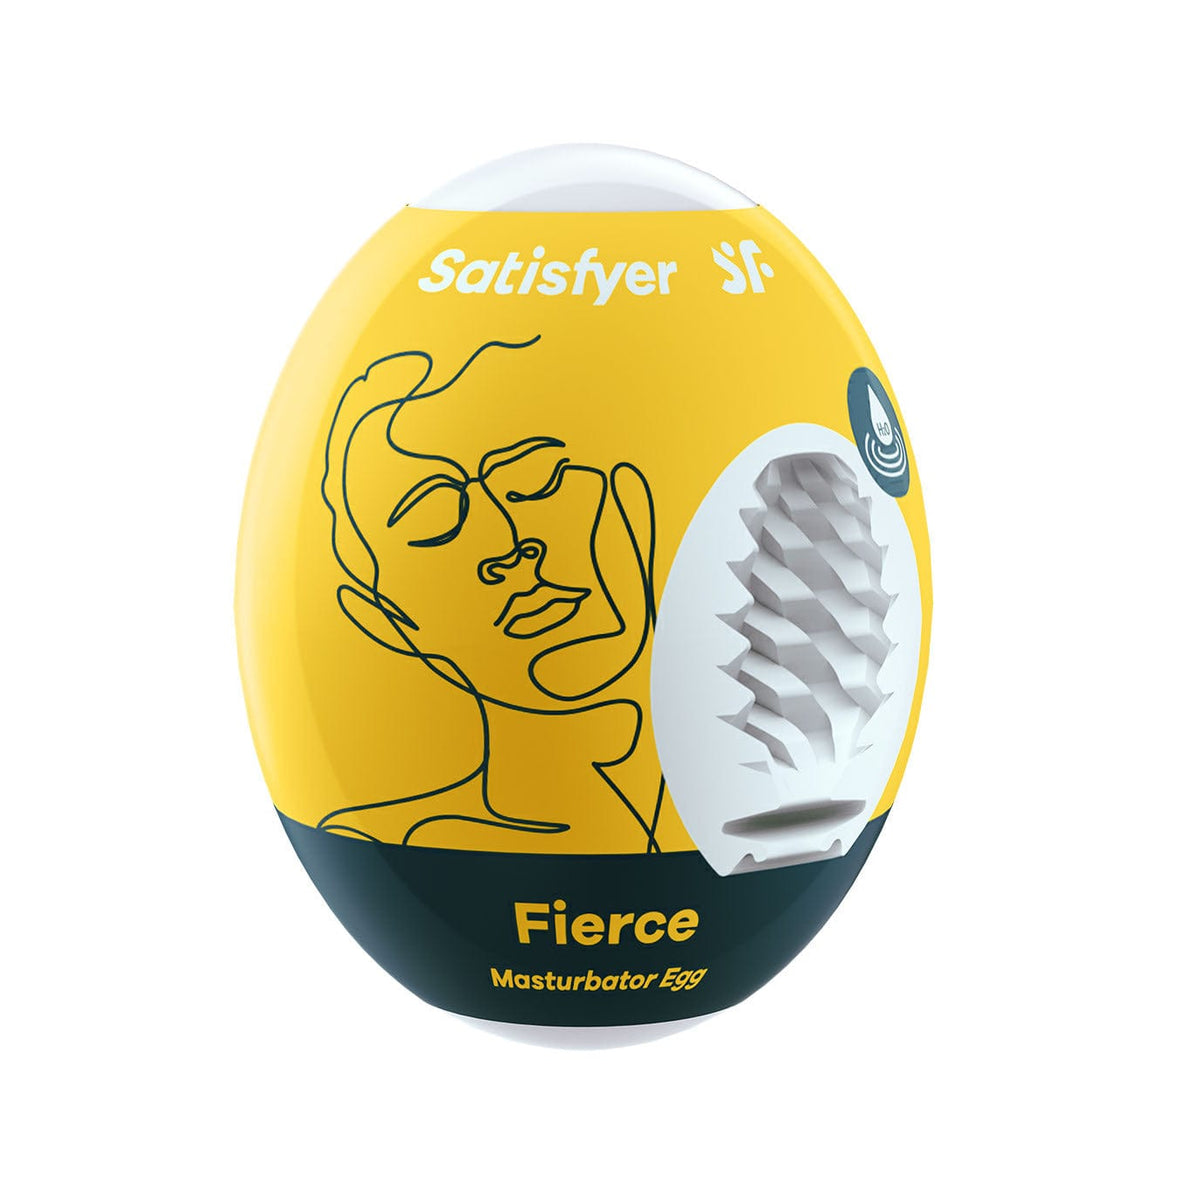 Satisfyer - Fierce Masturbator Egg (Yellow) -  Masturbator Egg (Non Vibration)  Durio.sg